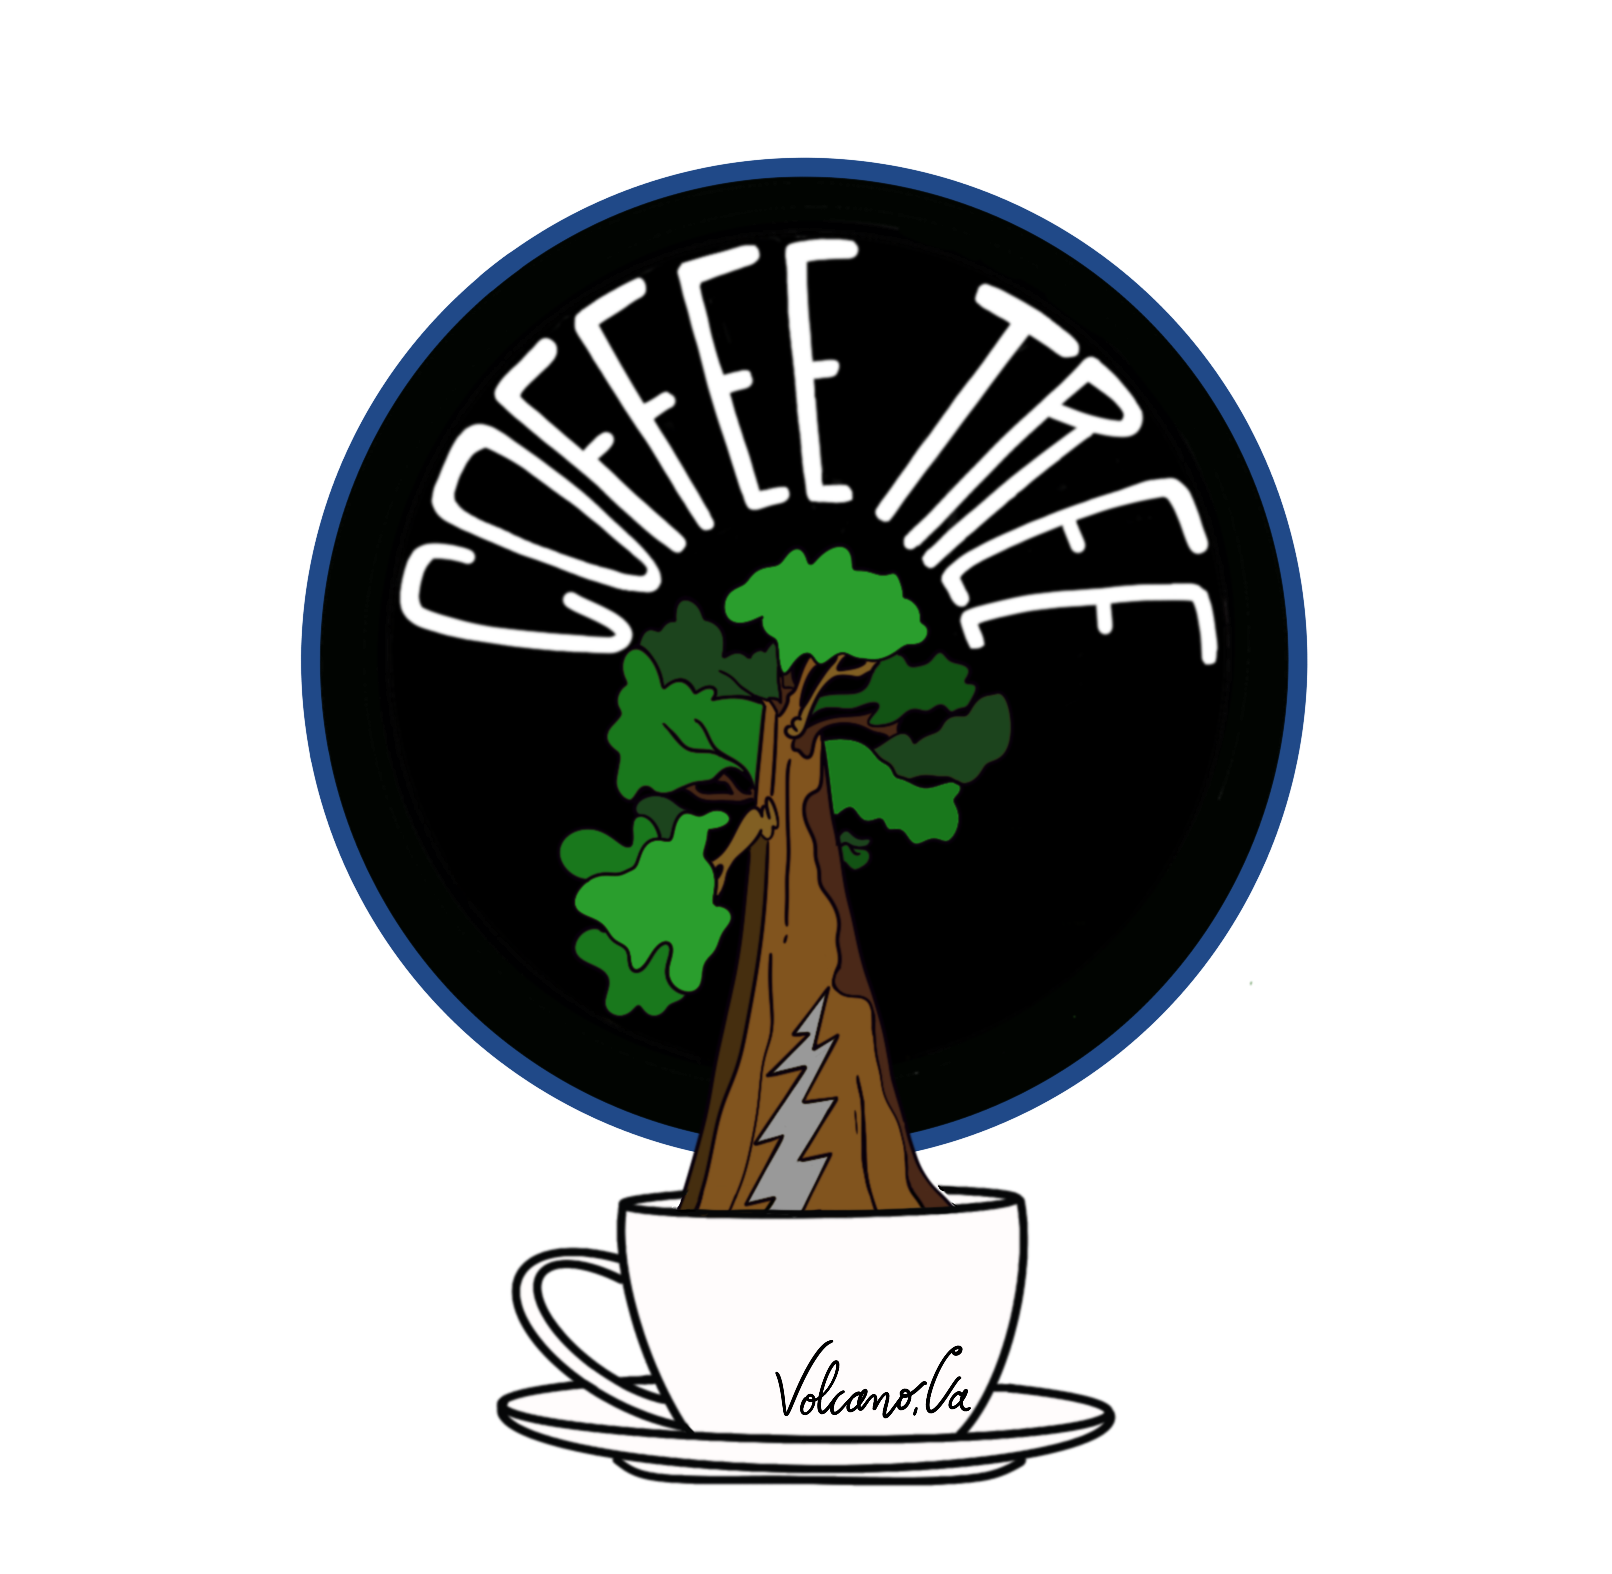 Coffee Tree logo